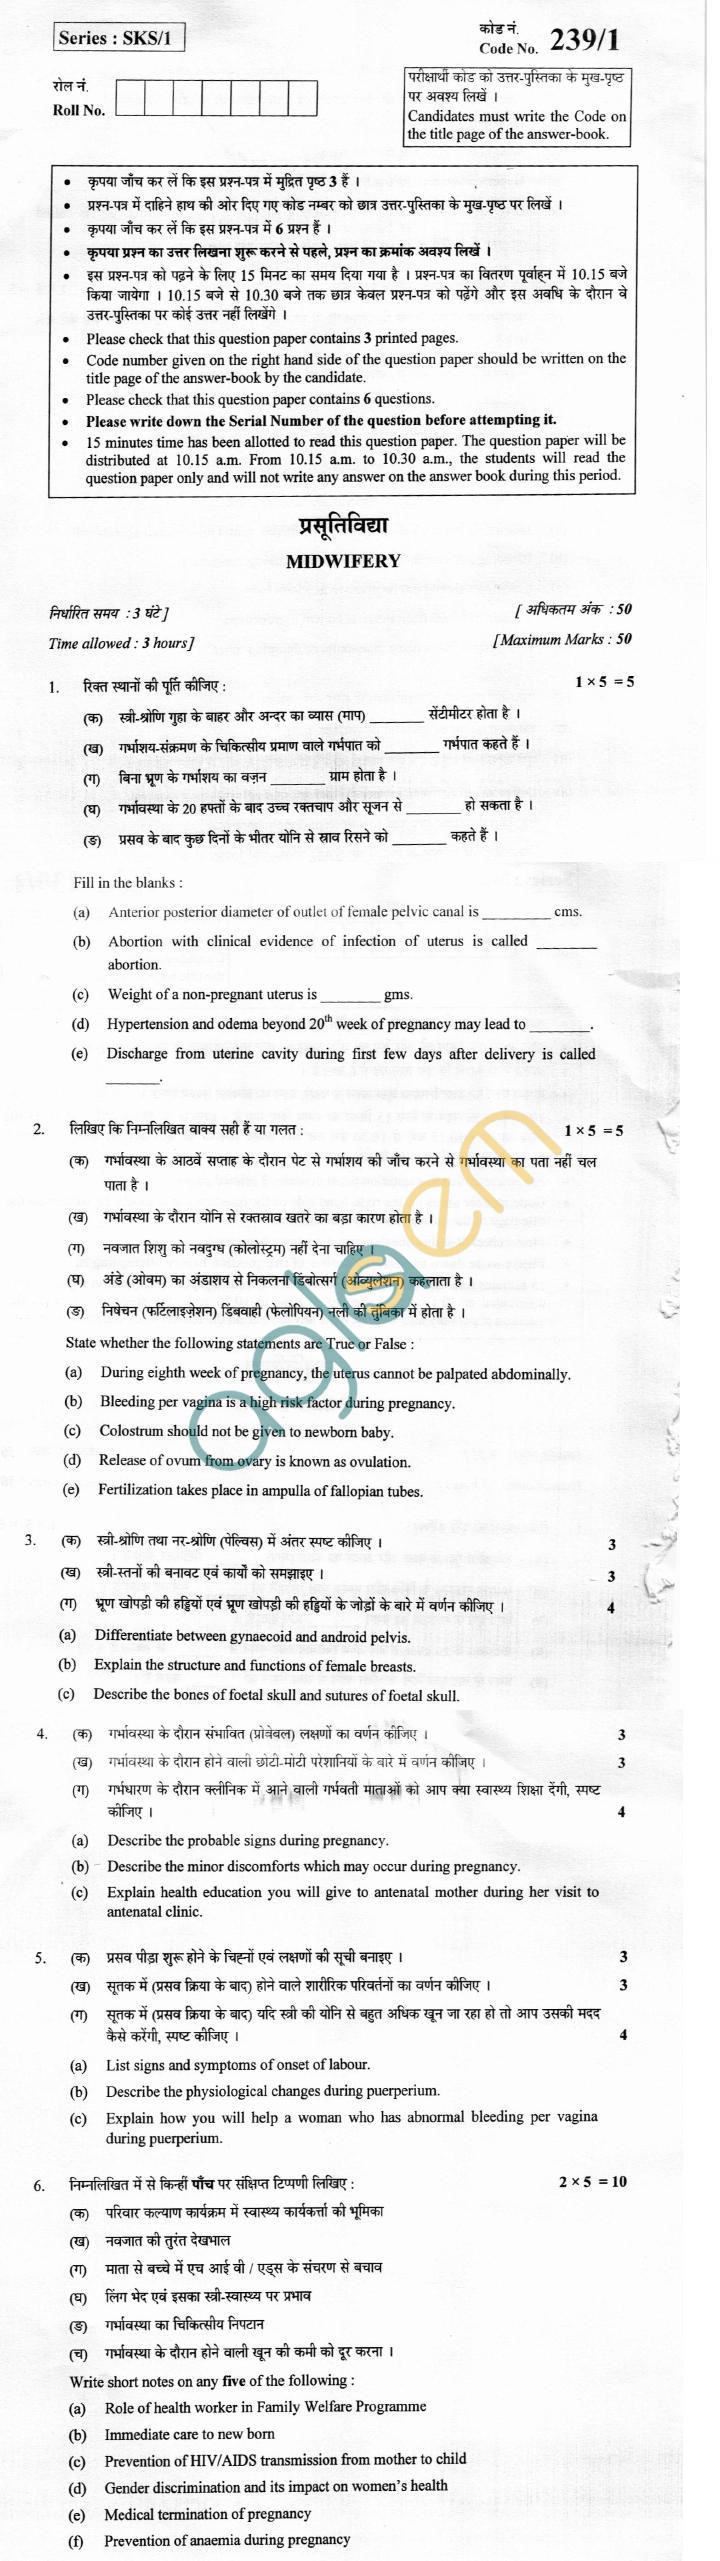 CBSE Board Exam 2013 Class XII Question Paper - Midwifery